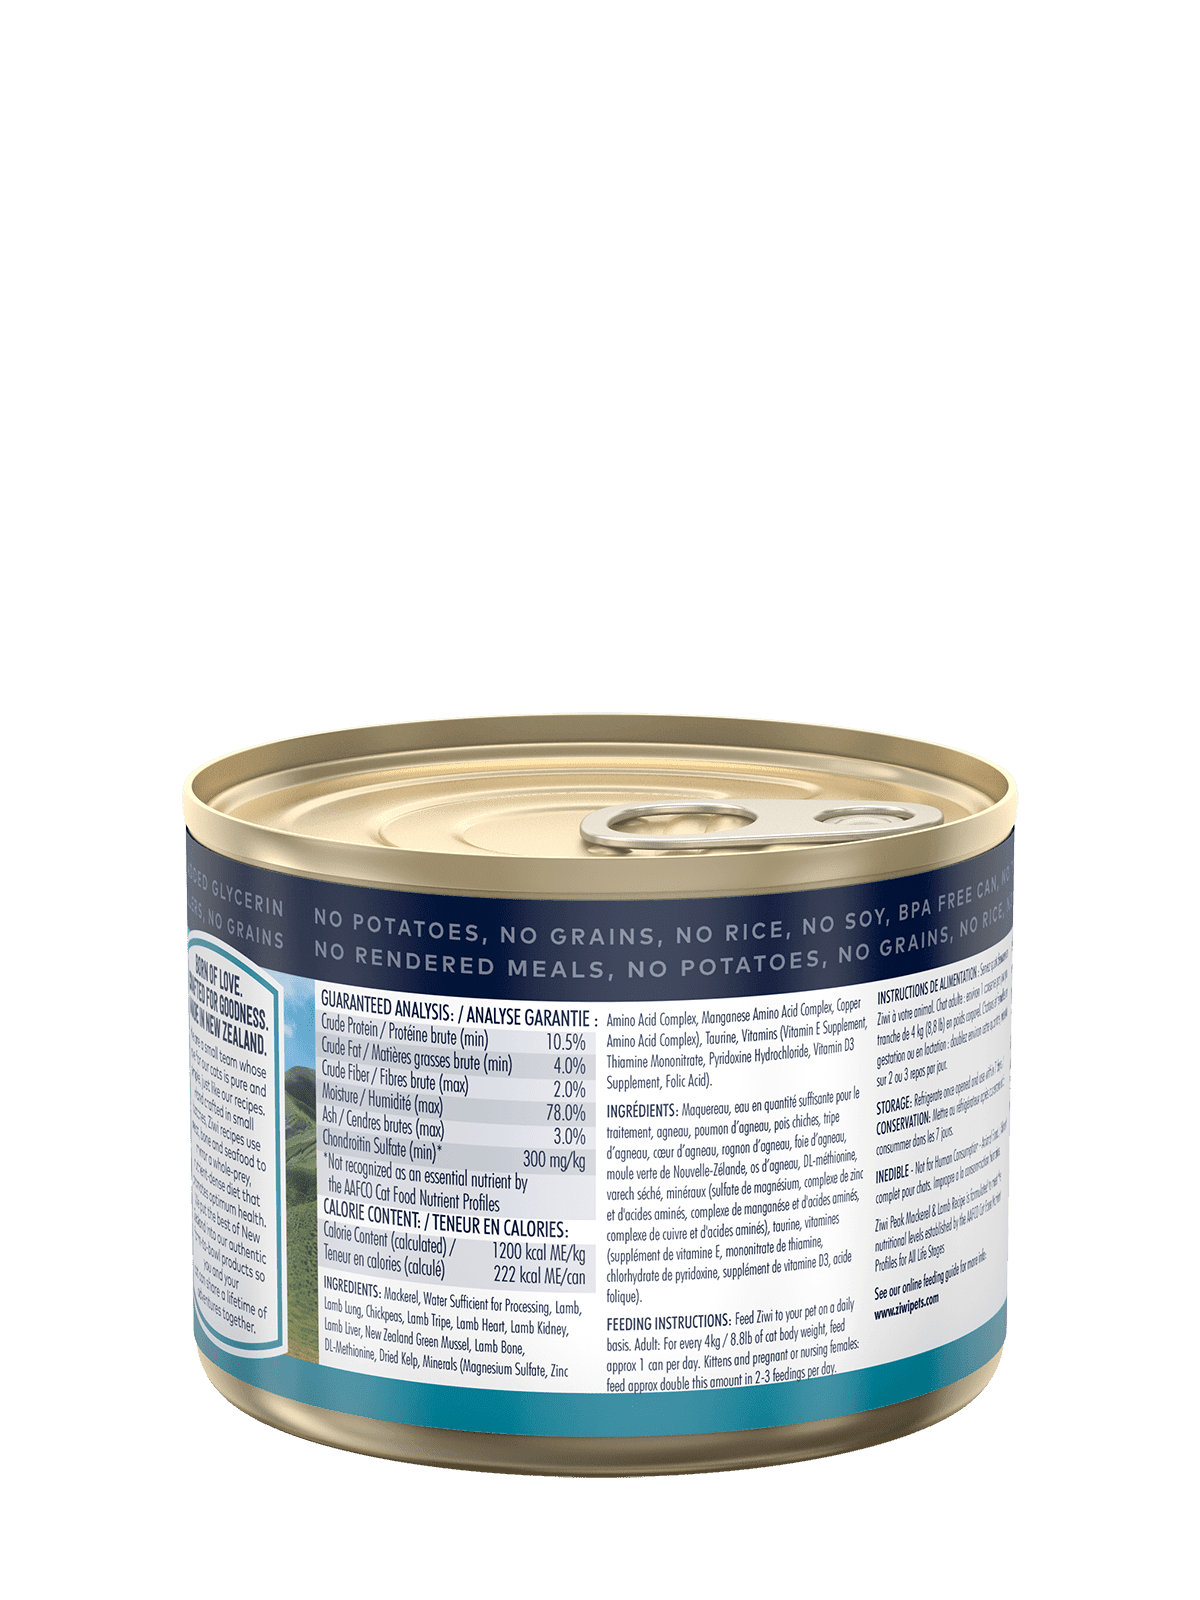 Ziwi Peak Canned Cat Wet Food Mackerel & Lamb